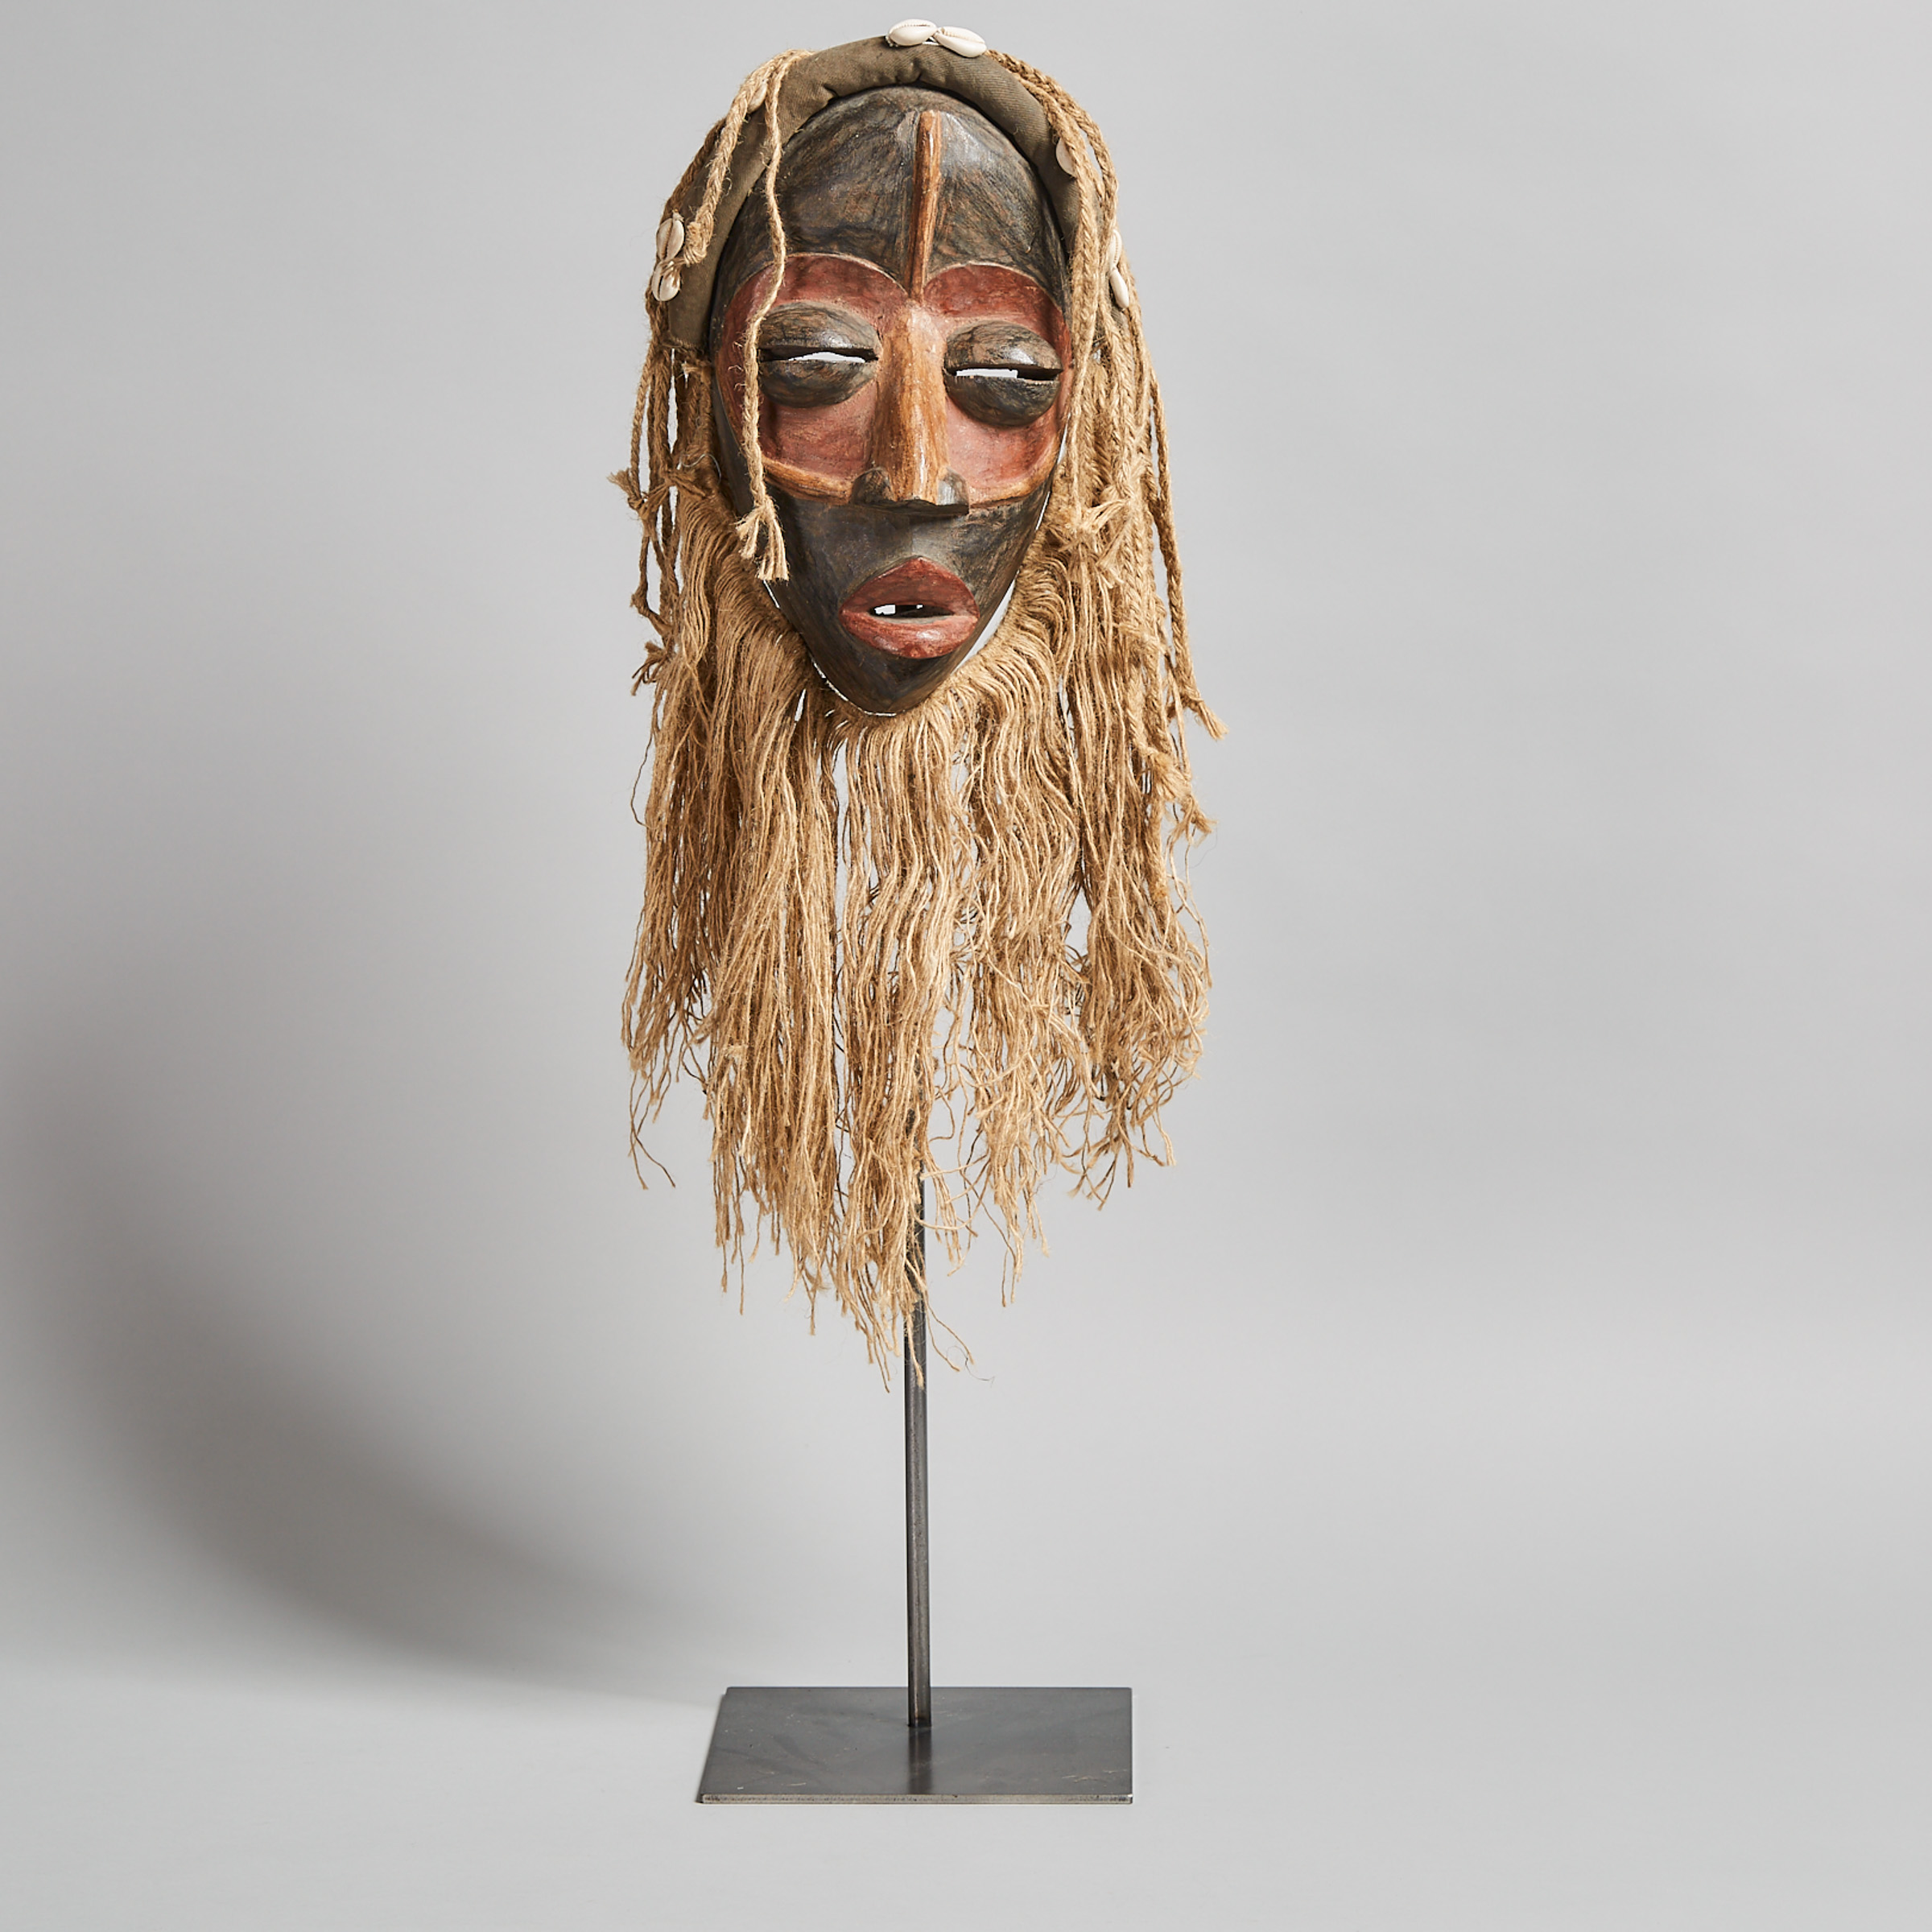 Modern Dan Mask, Ivory Coast/ Liberia, West Africa